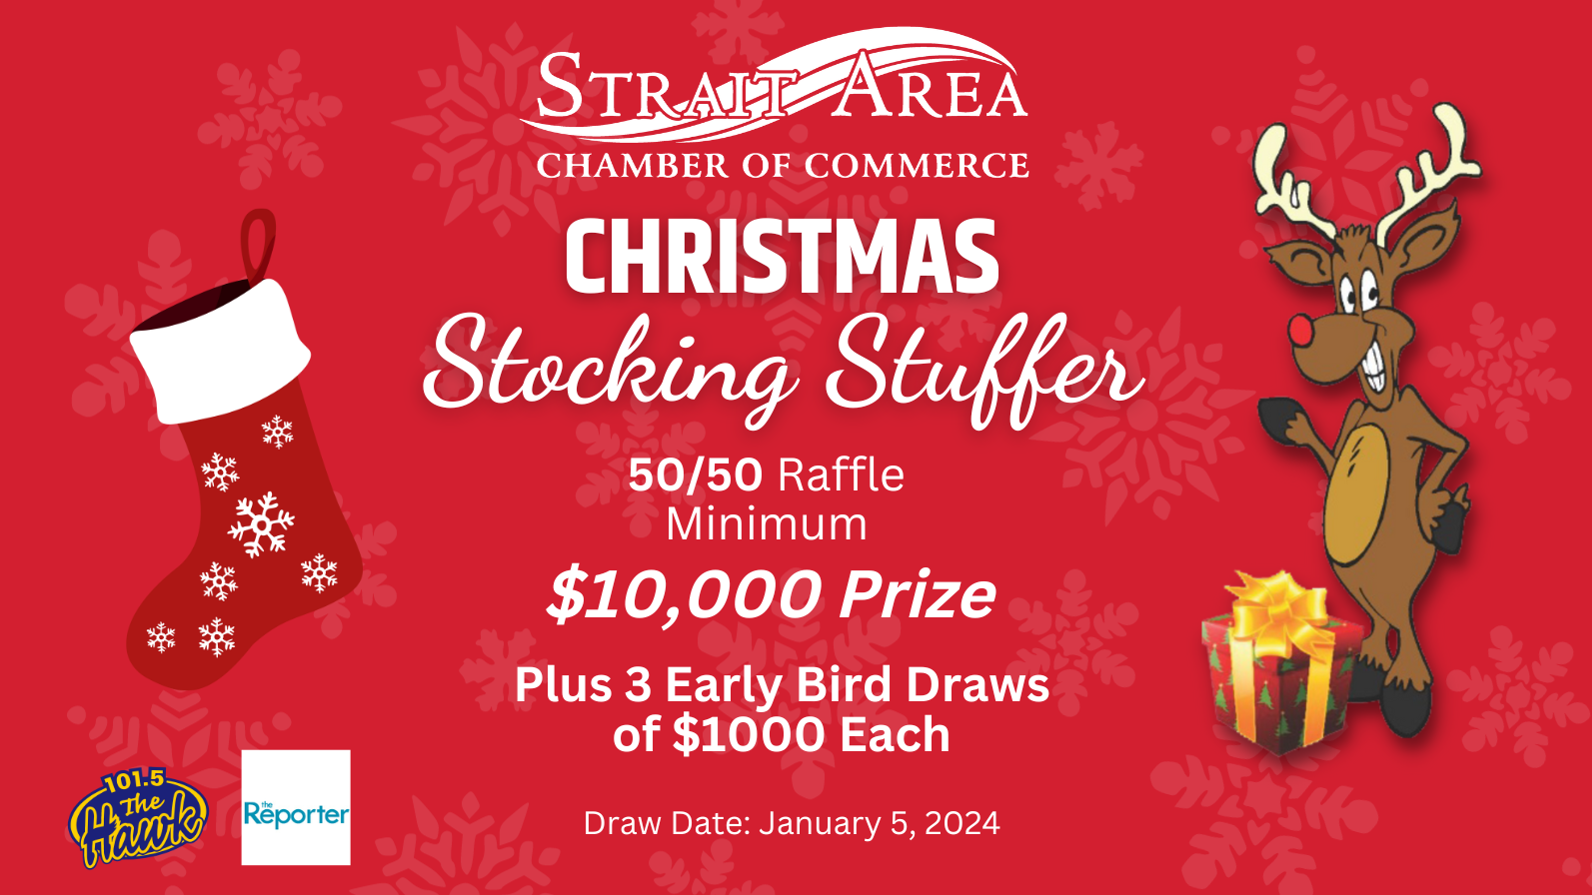 Strait Area Chamber of Commerce Christmas 50/50 Raffle | Rafflebox